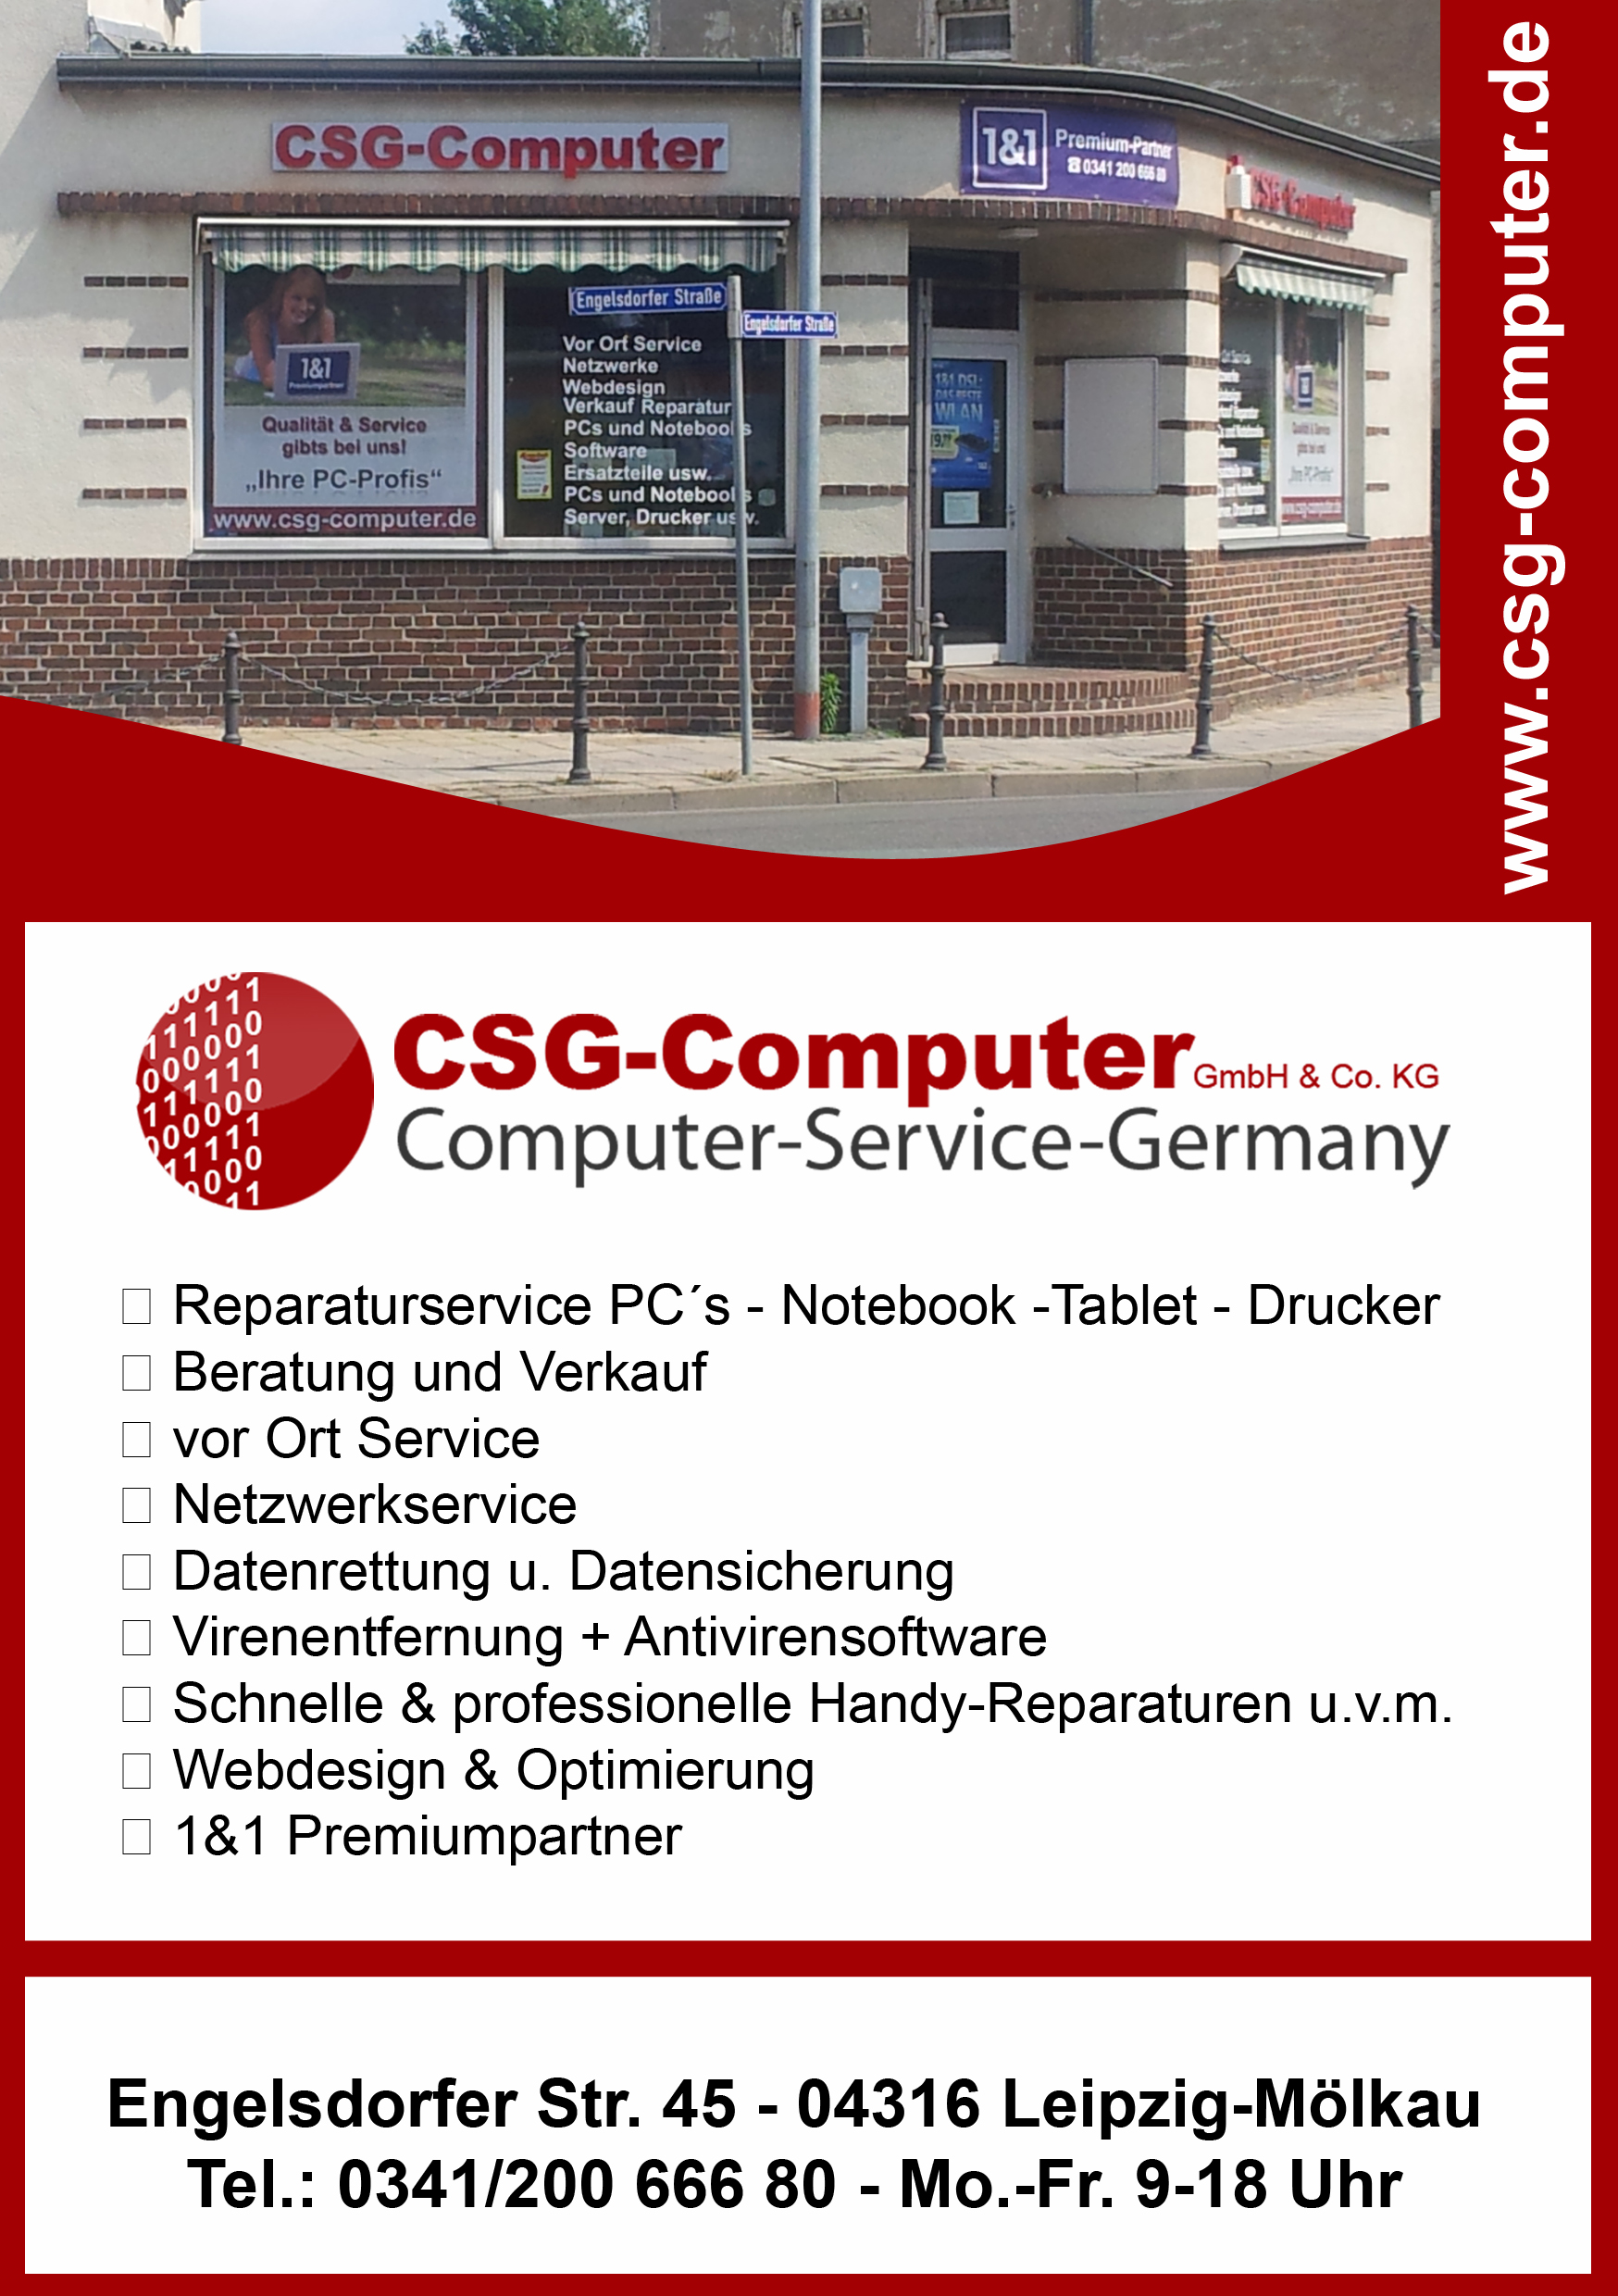 Bild 2 CSG-Computer GmbH & Co KG in Leipzig